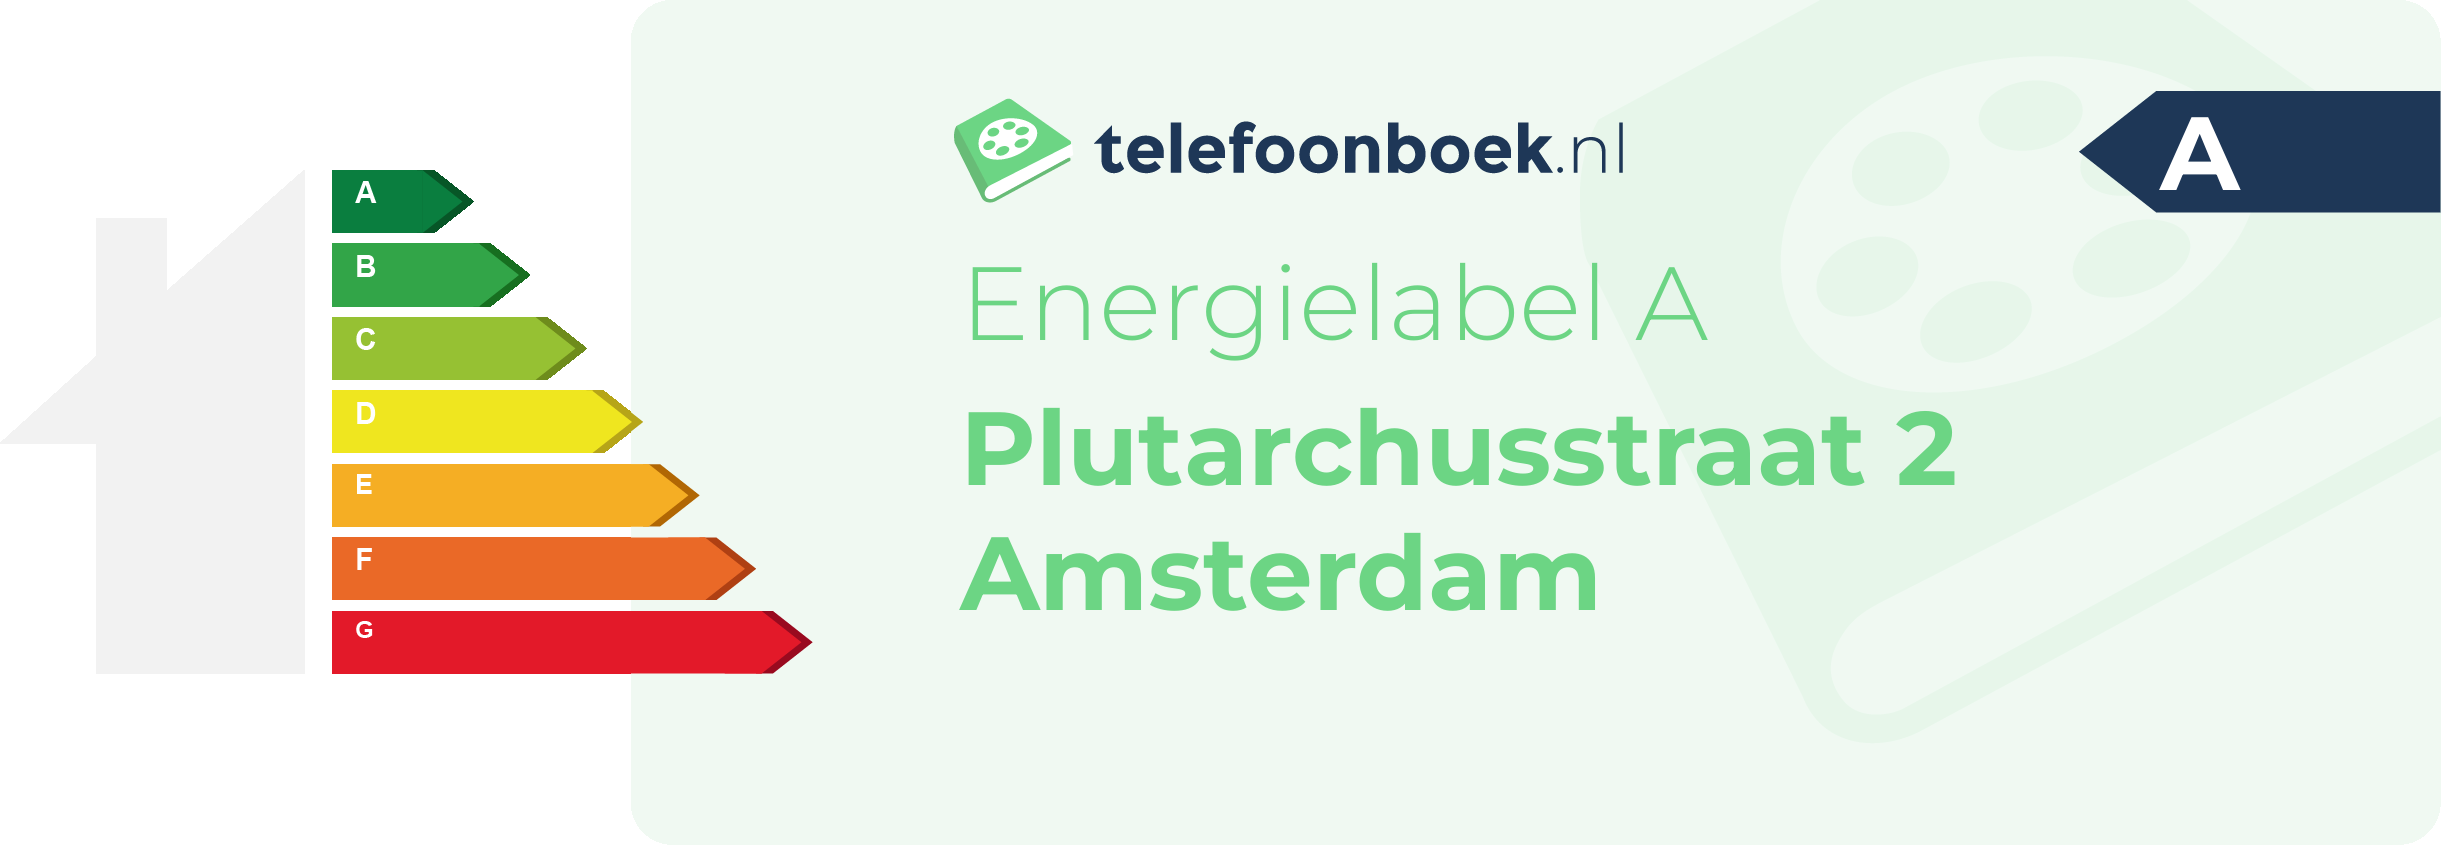 Energielabel Plutarchusstraat 2 Amsterdam